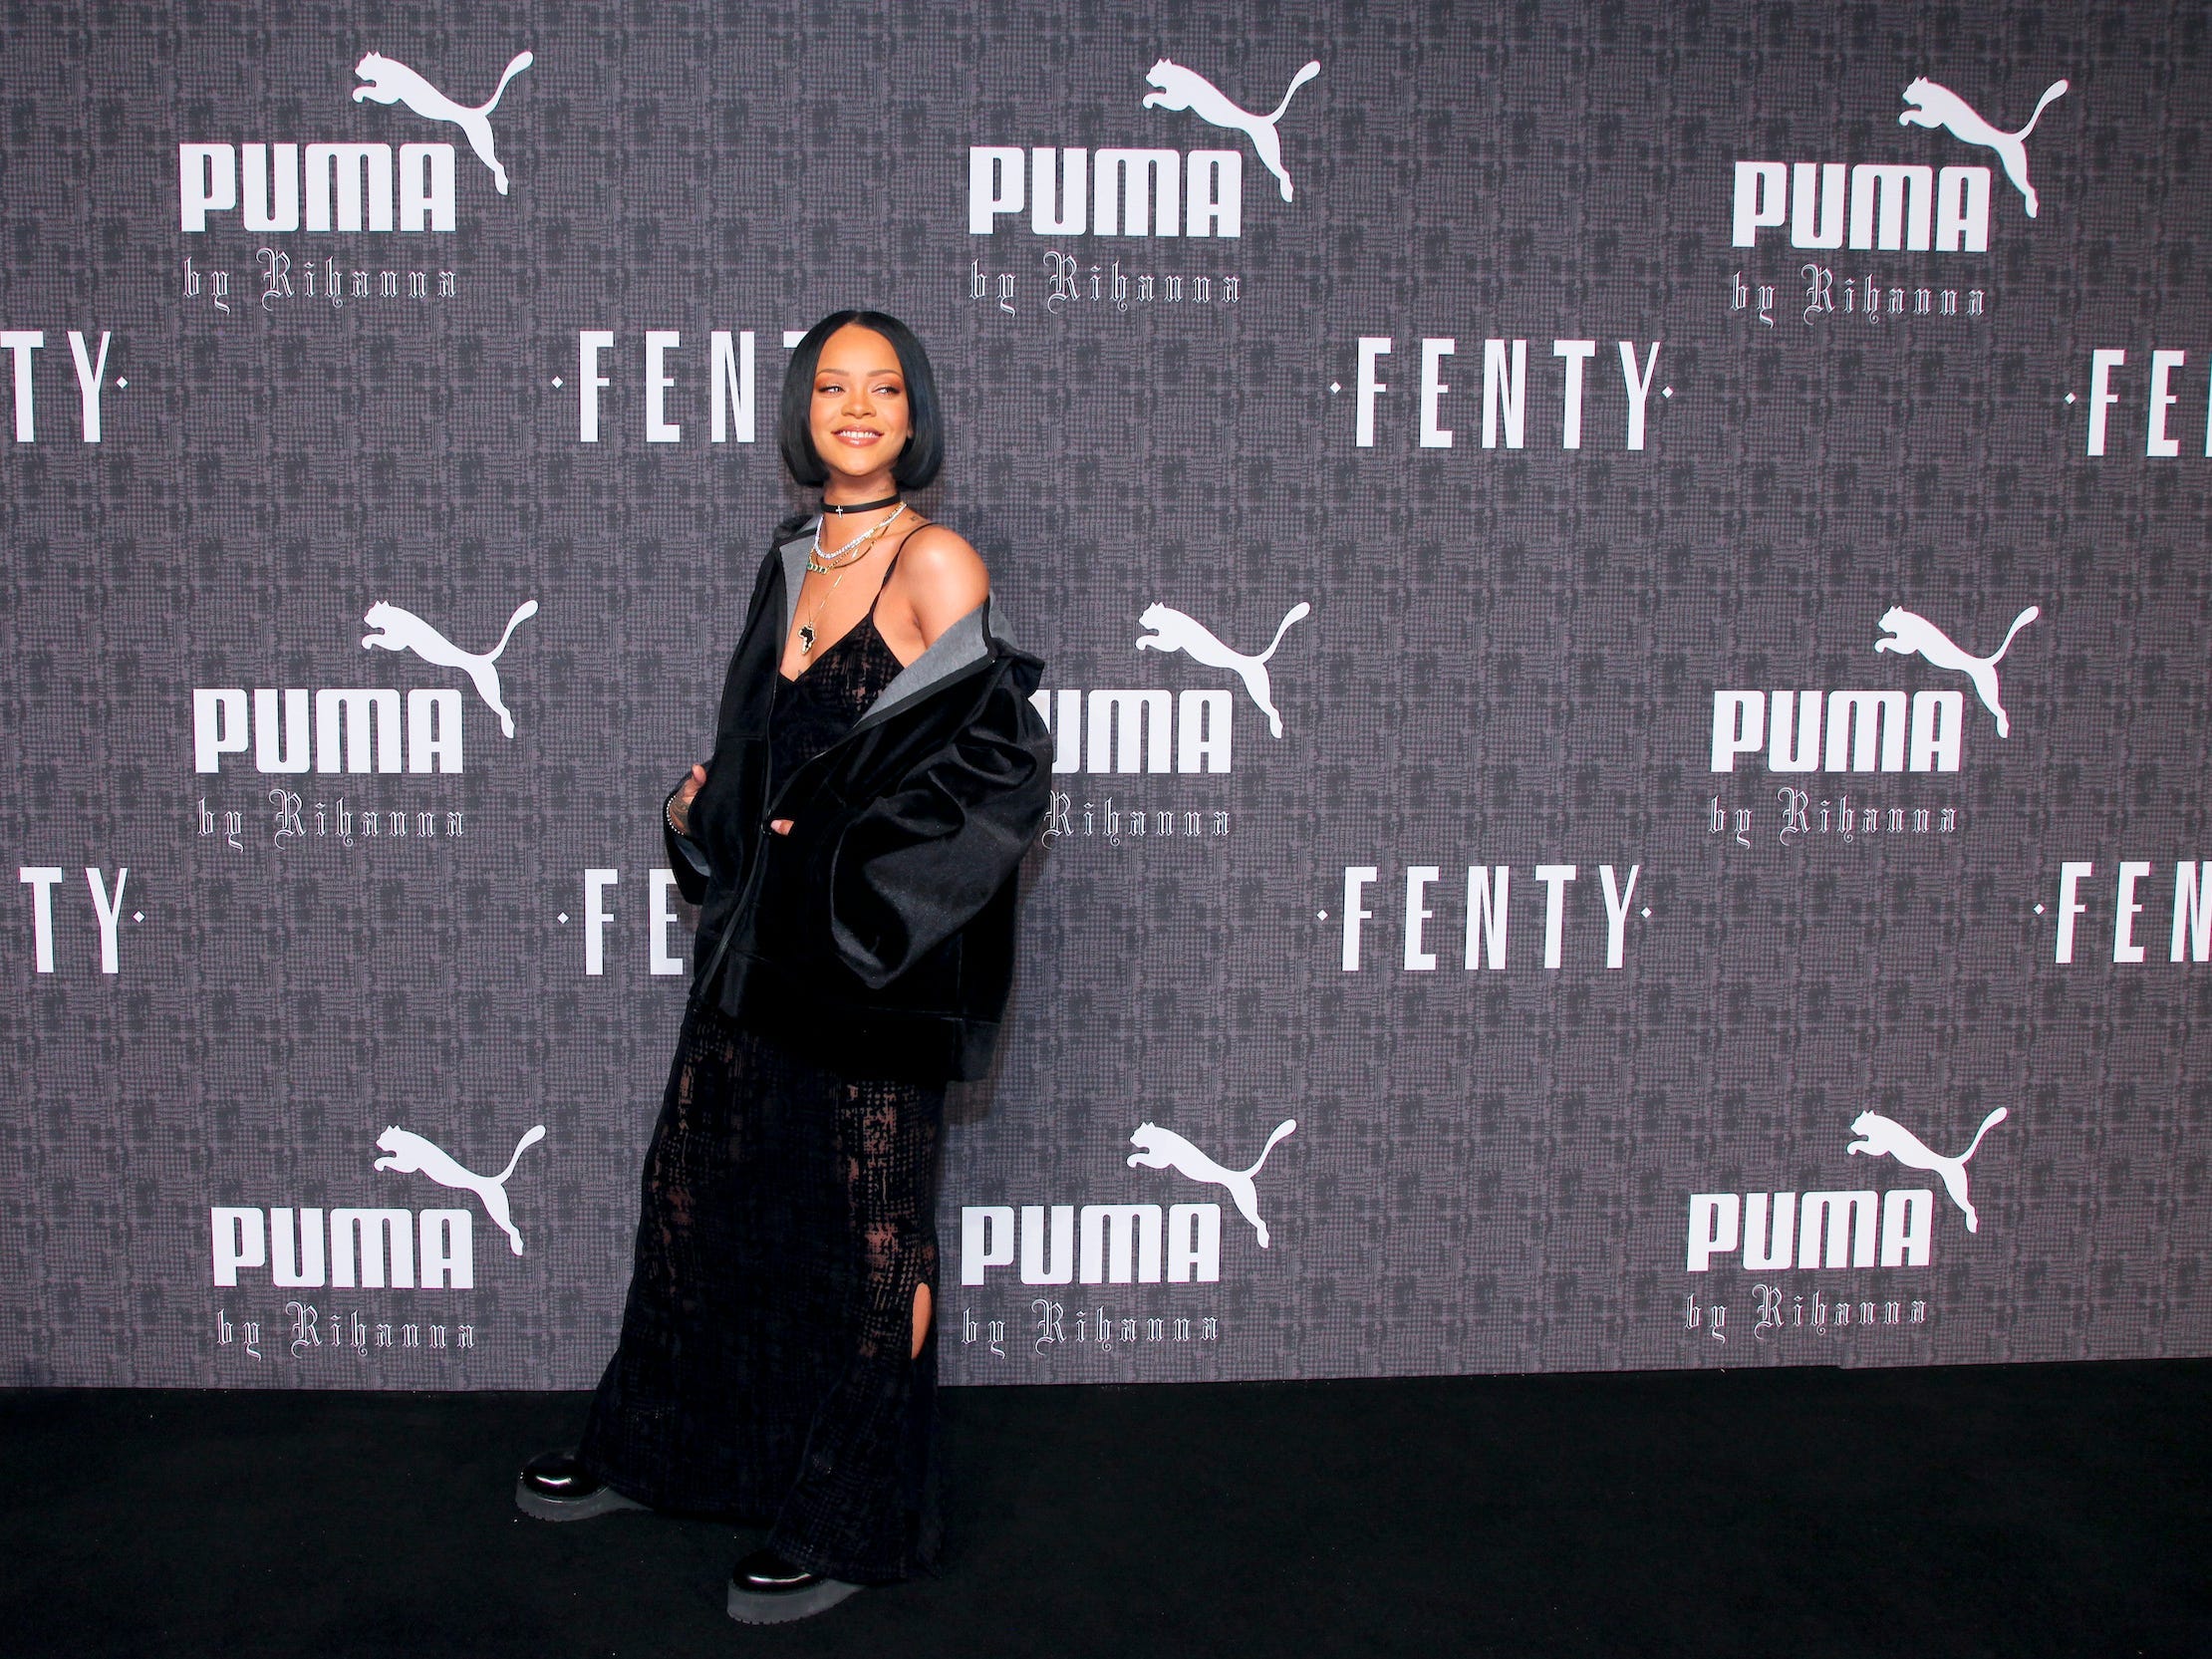 Honderd jaar inrichting correct Puma channeled Michael Jordan to announce Rihanna's return to the  sportswear brand: 'She's back'